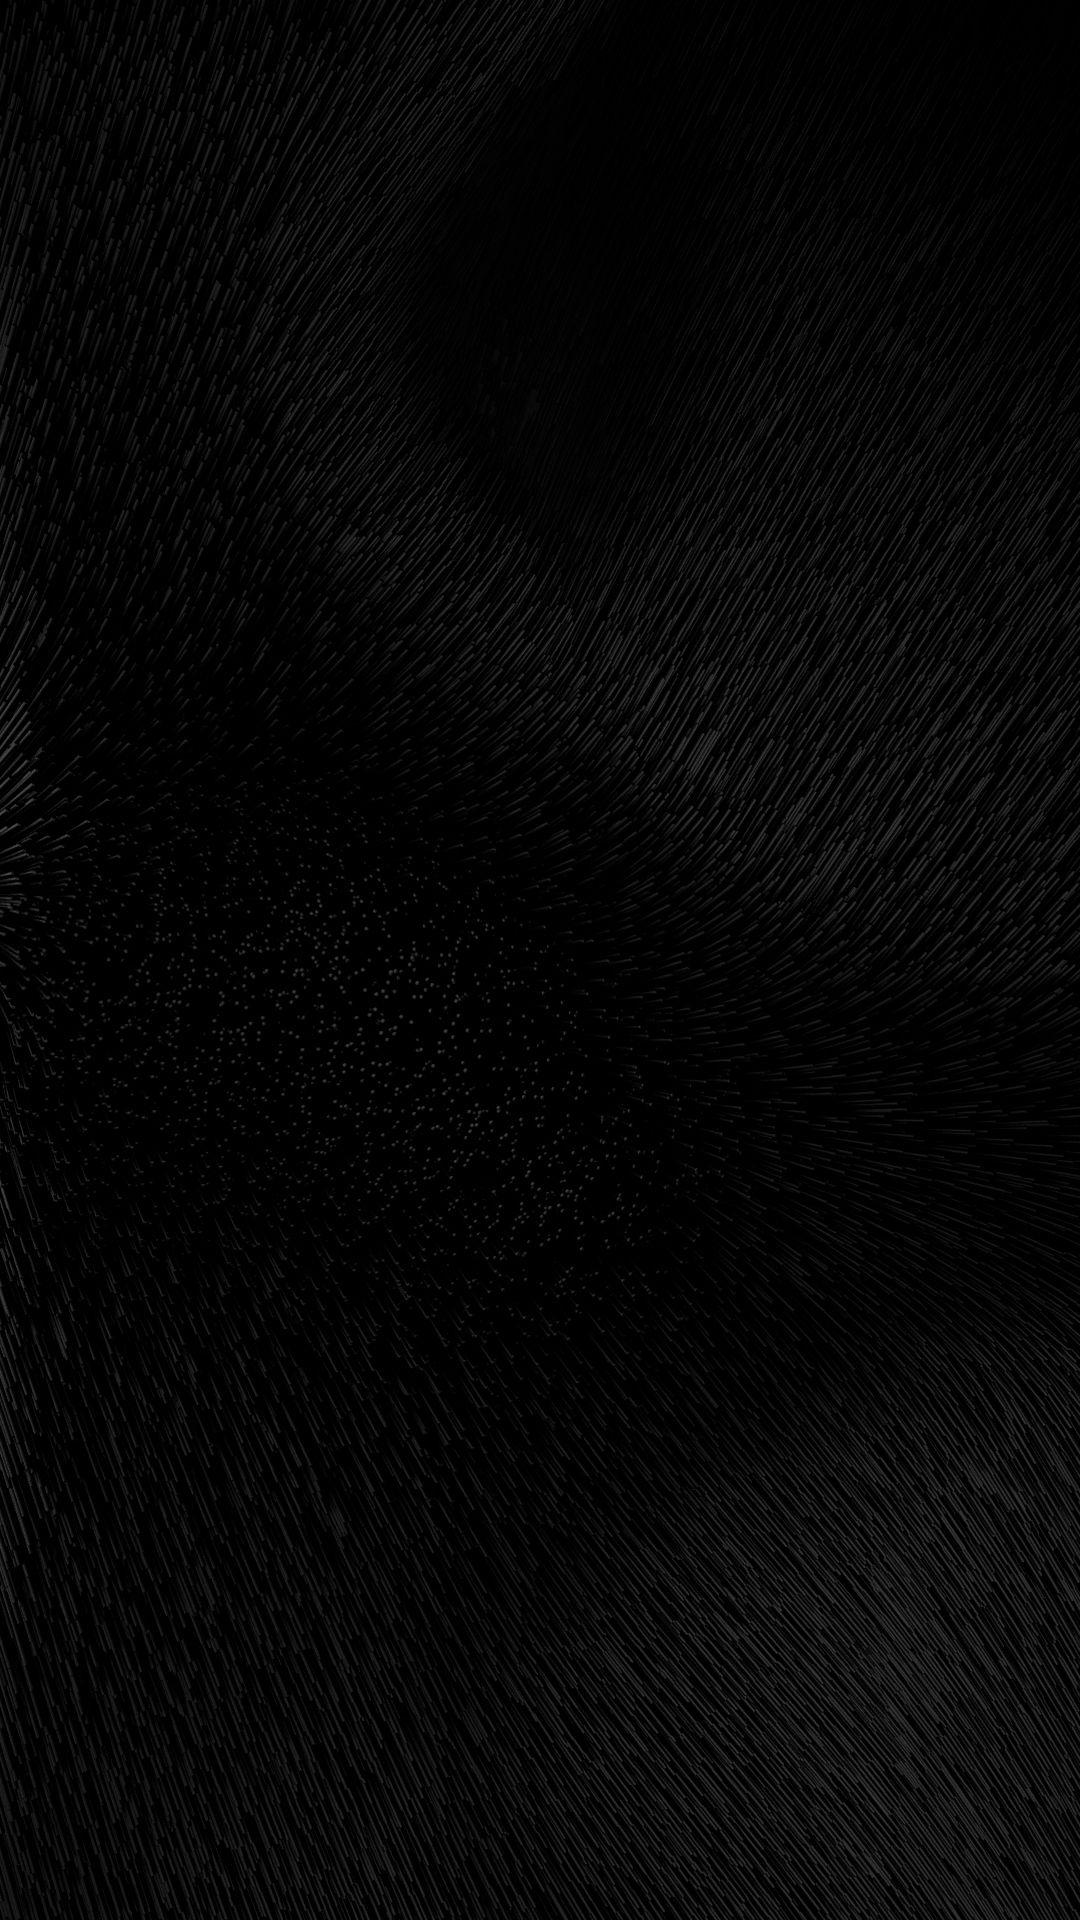 HD Black And White Wallpaper Explore more Black And White Color  Electronic Arts Gr  Black and blue wallpaper Black wallpaper iphone  dark Dark black wallpaper